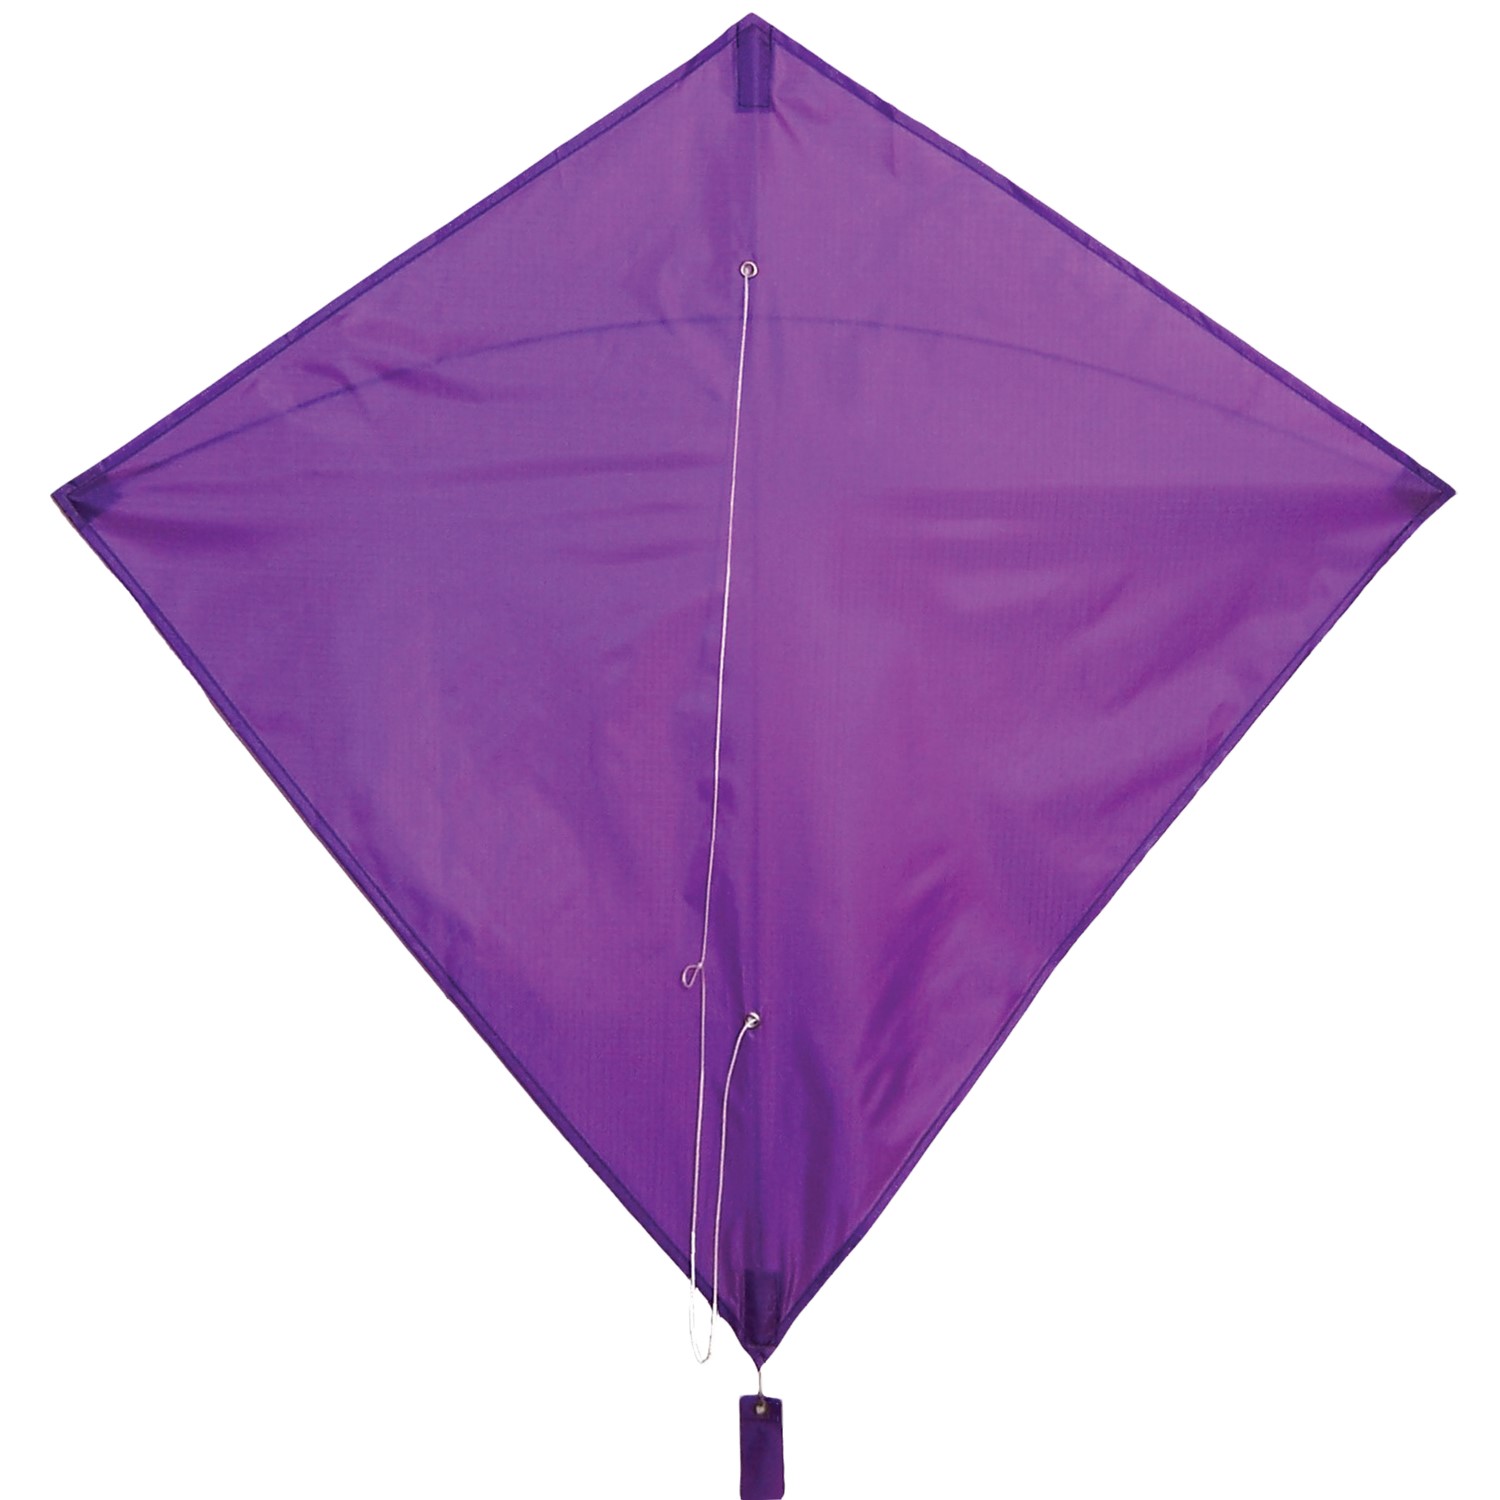 In the Breeze Purple Colorfly 30" Diamond Kite 2993